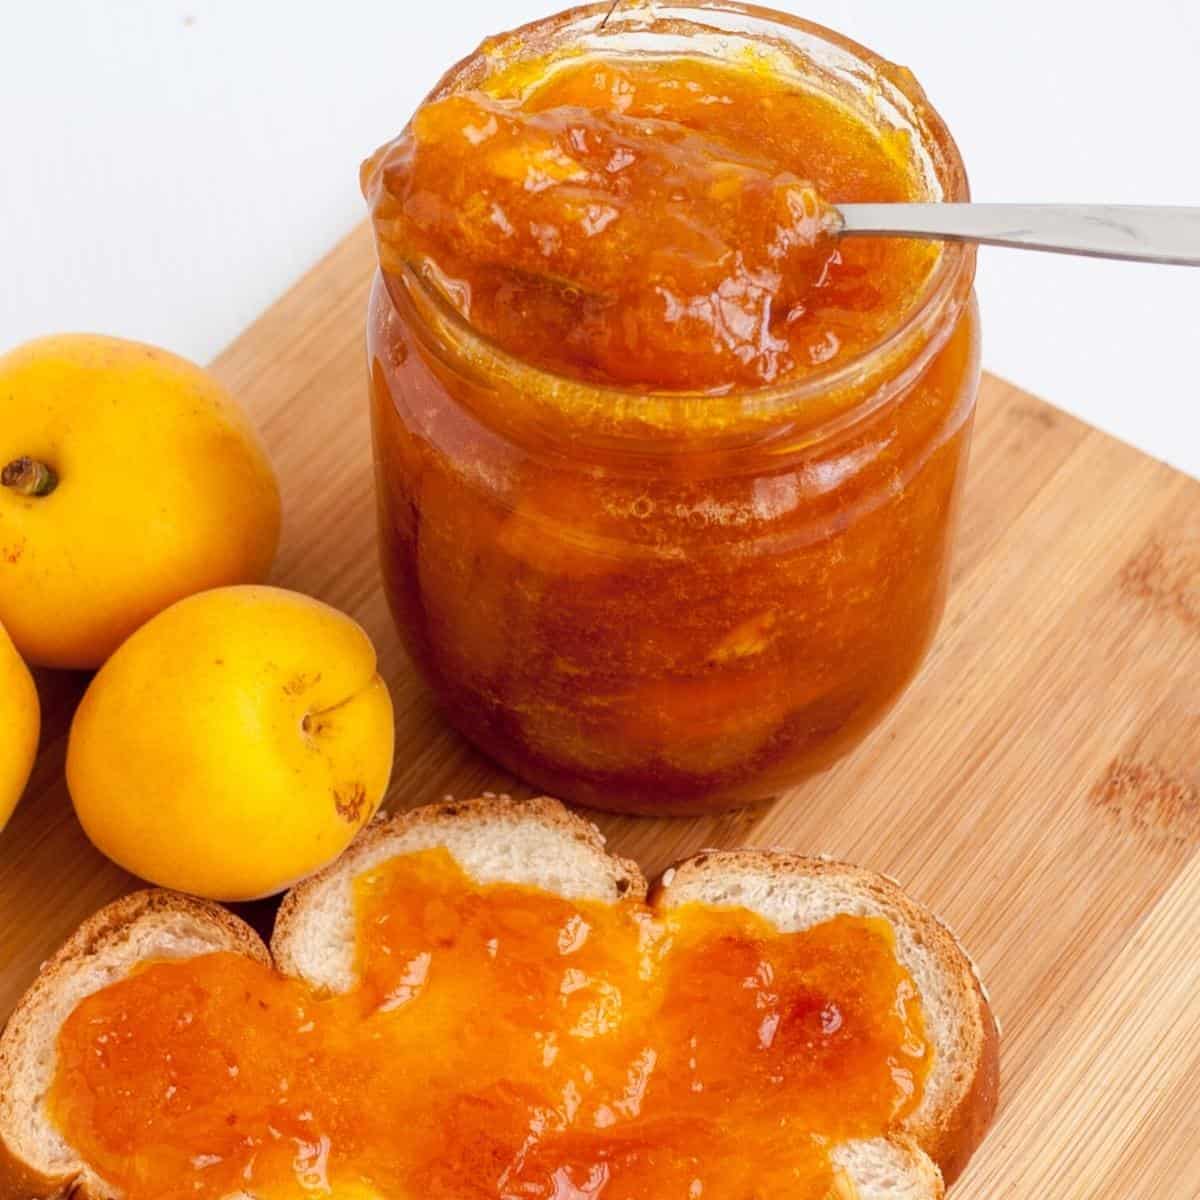 A jar of apricot jam.